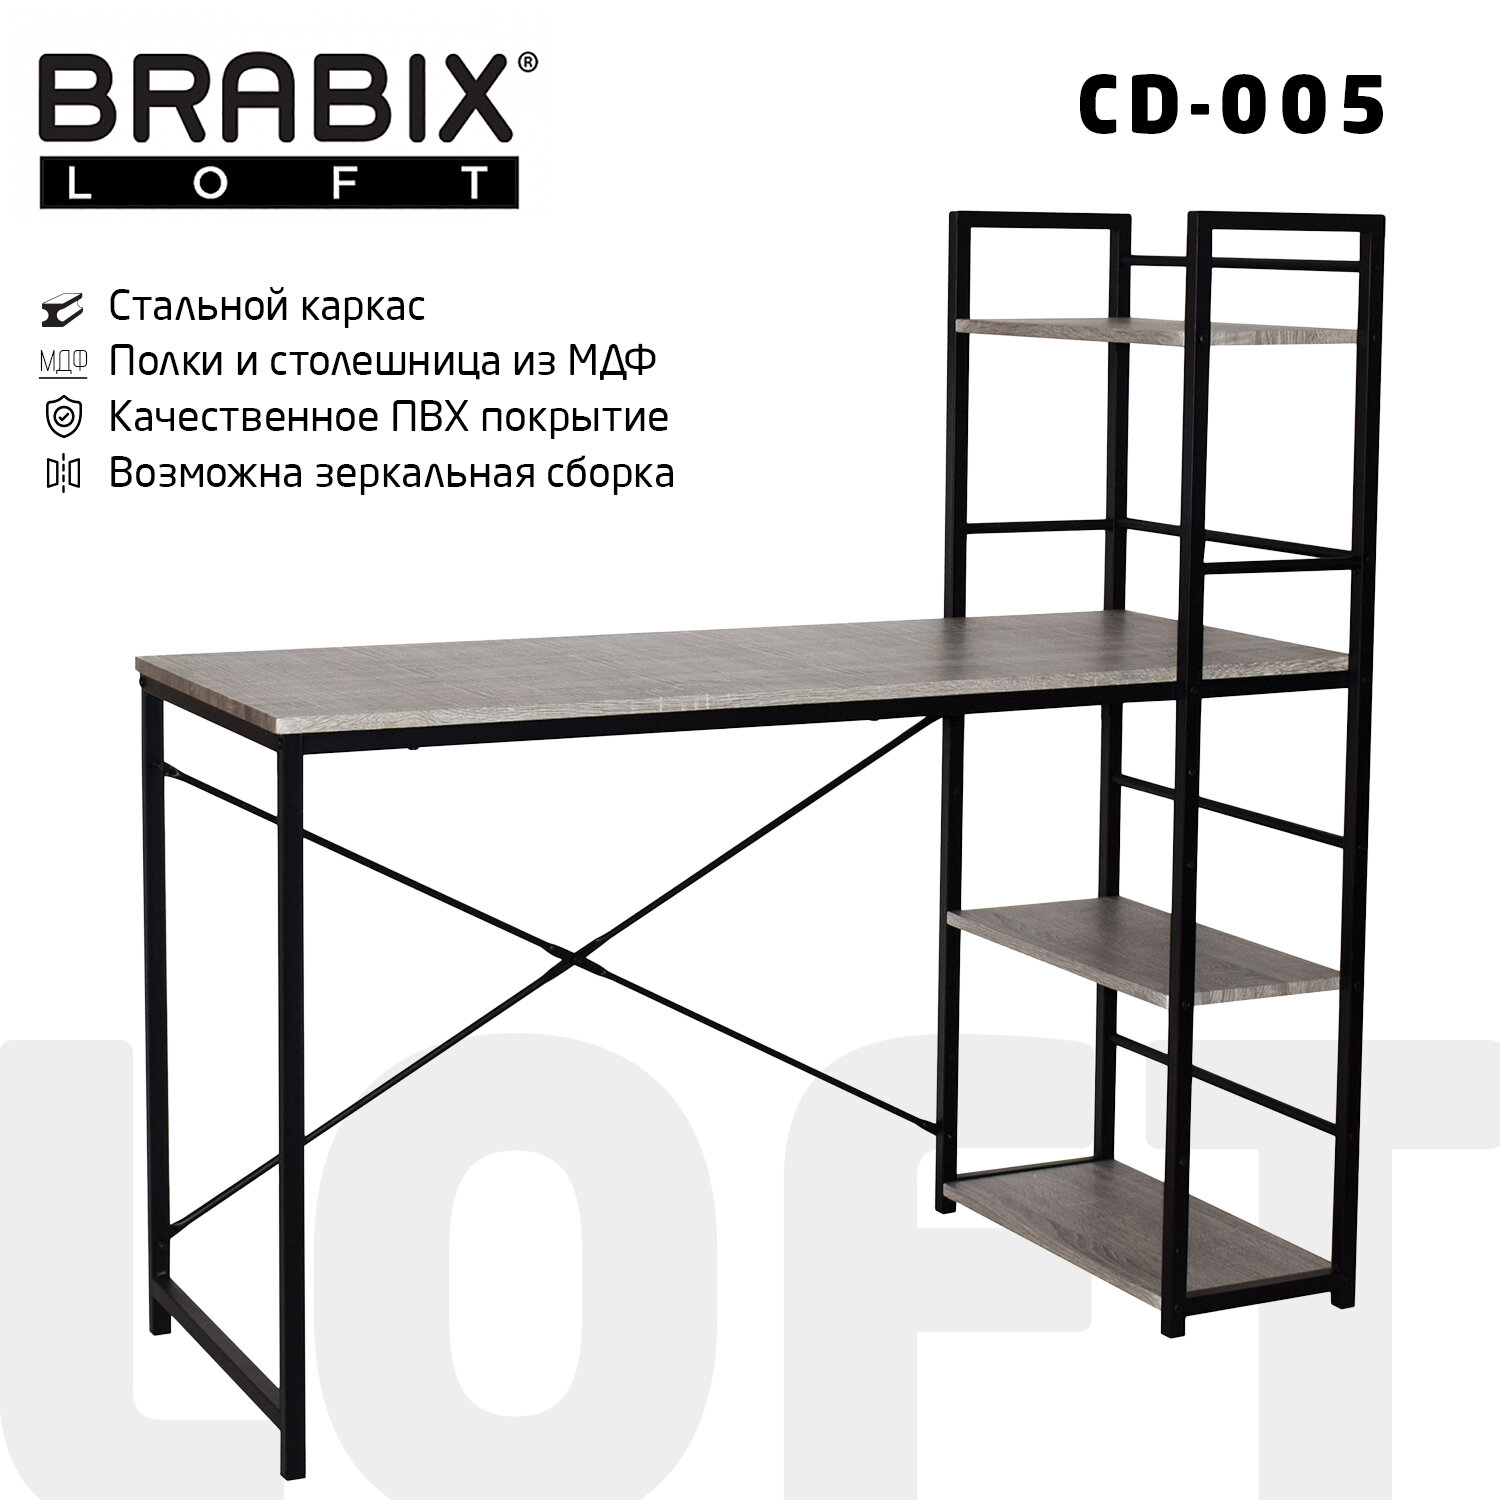 Стол на металлокаркасе BRABIX "LOFT CD-005", 1200х520х1200 мм, 3 полки, цвет дуб антик, 641222